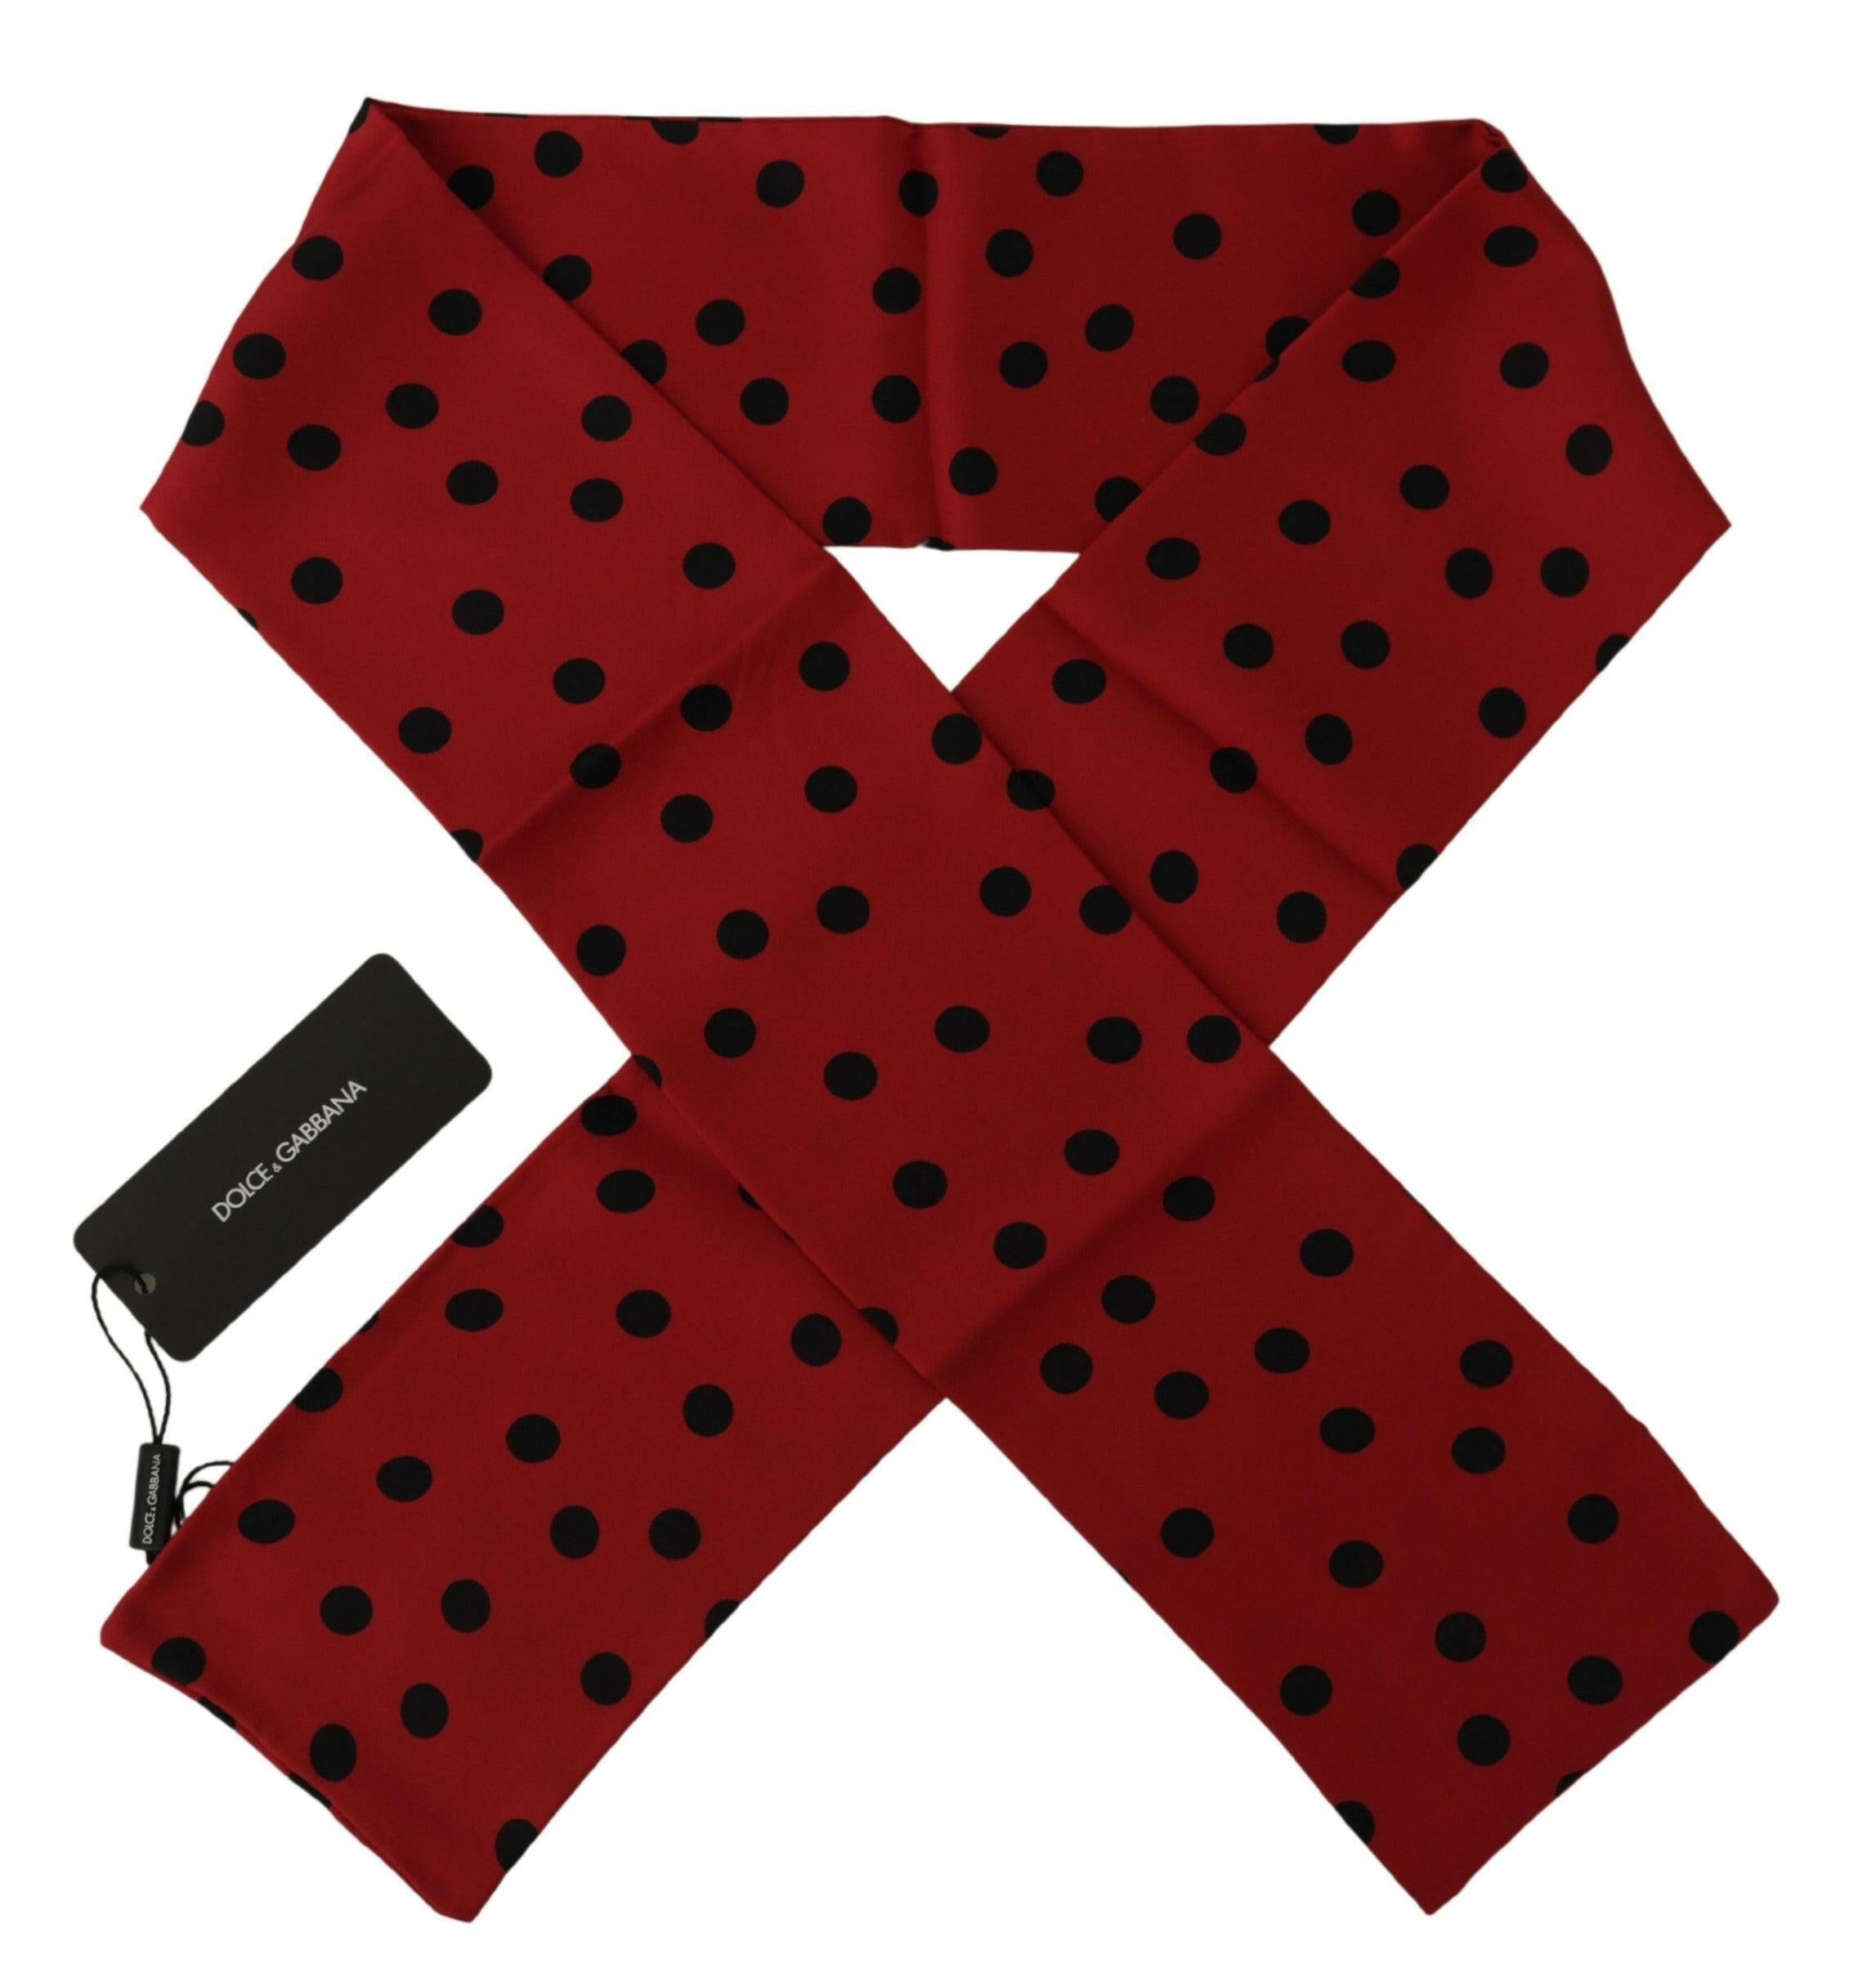 Dolce & Gabbana Red Polka Dot Silk Shawl Neck Wrap Scarf - GENUINE AUTHENTIC BRAND LLC  